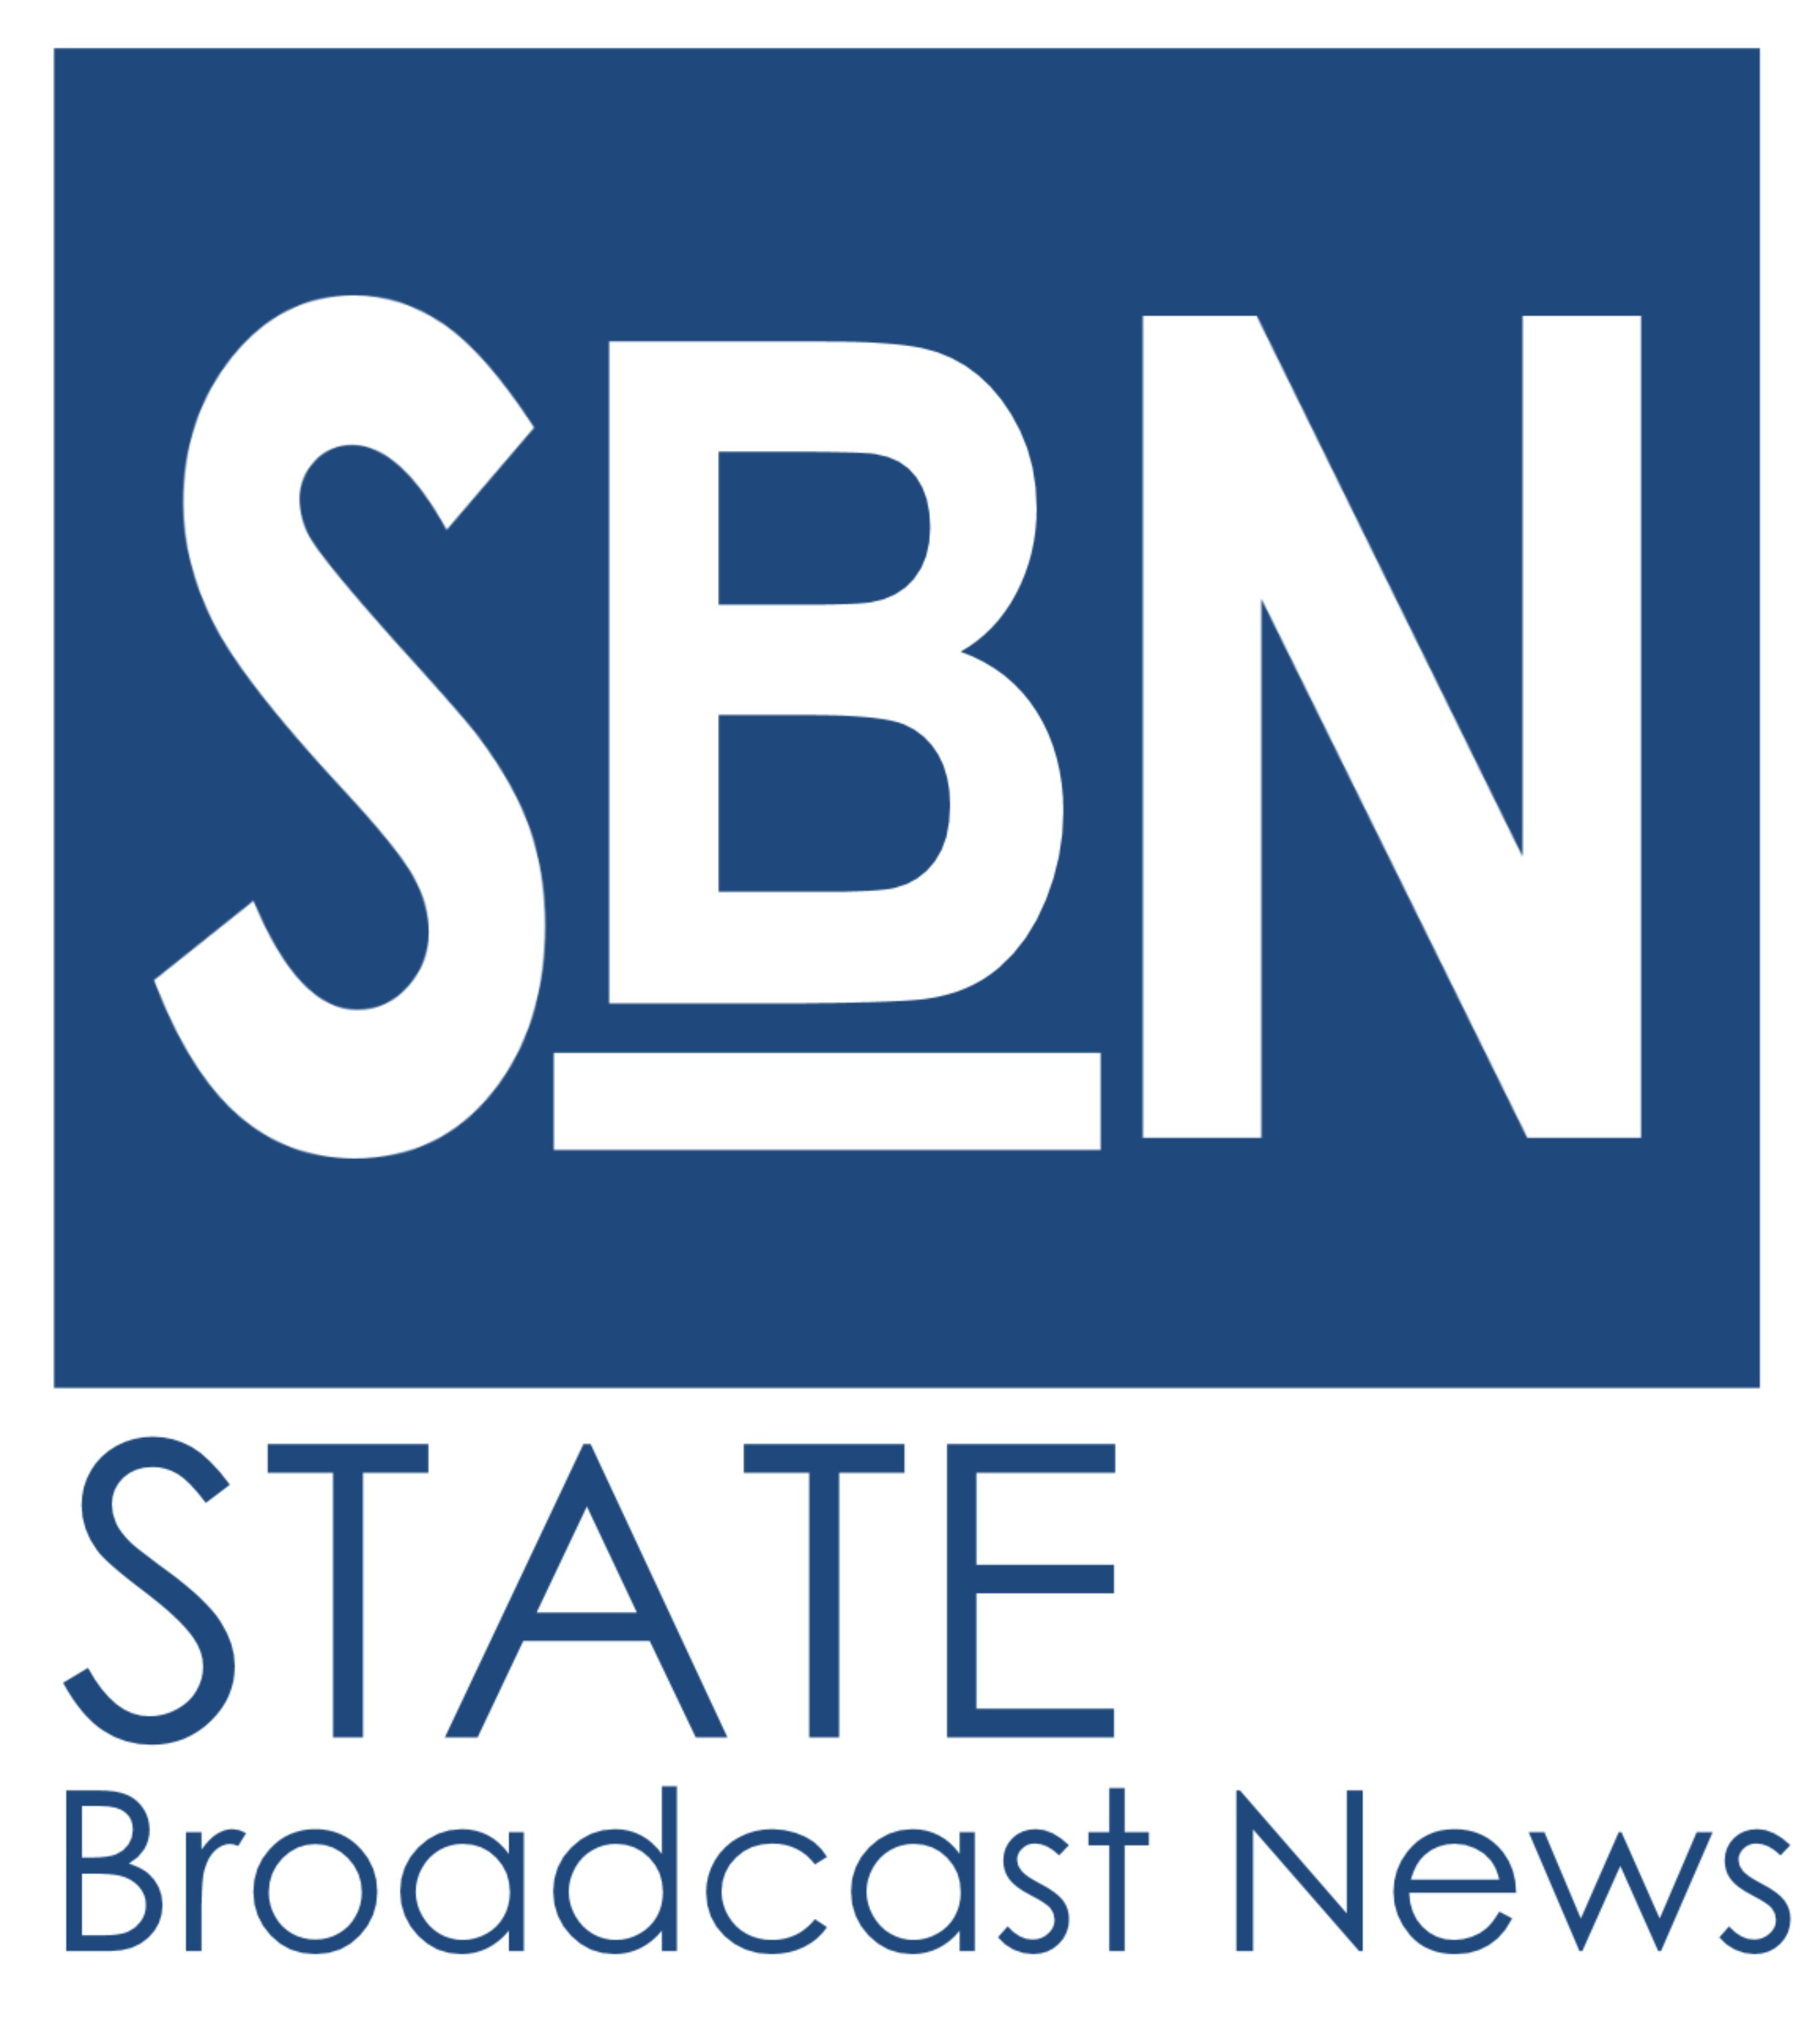 StateBroadcastNews.com Audio and Video News Reports